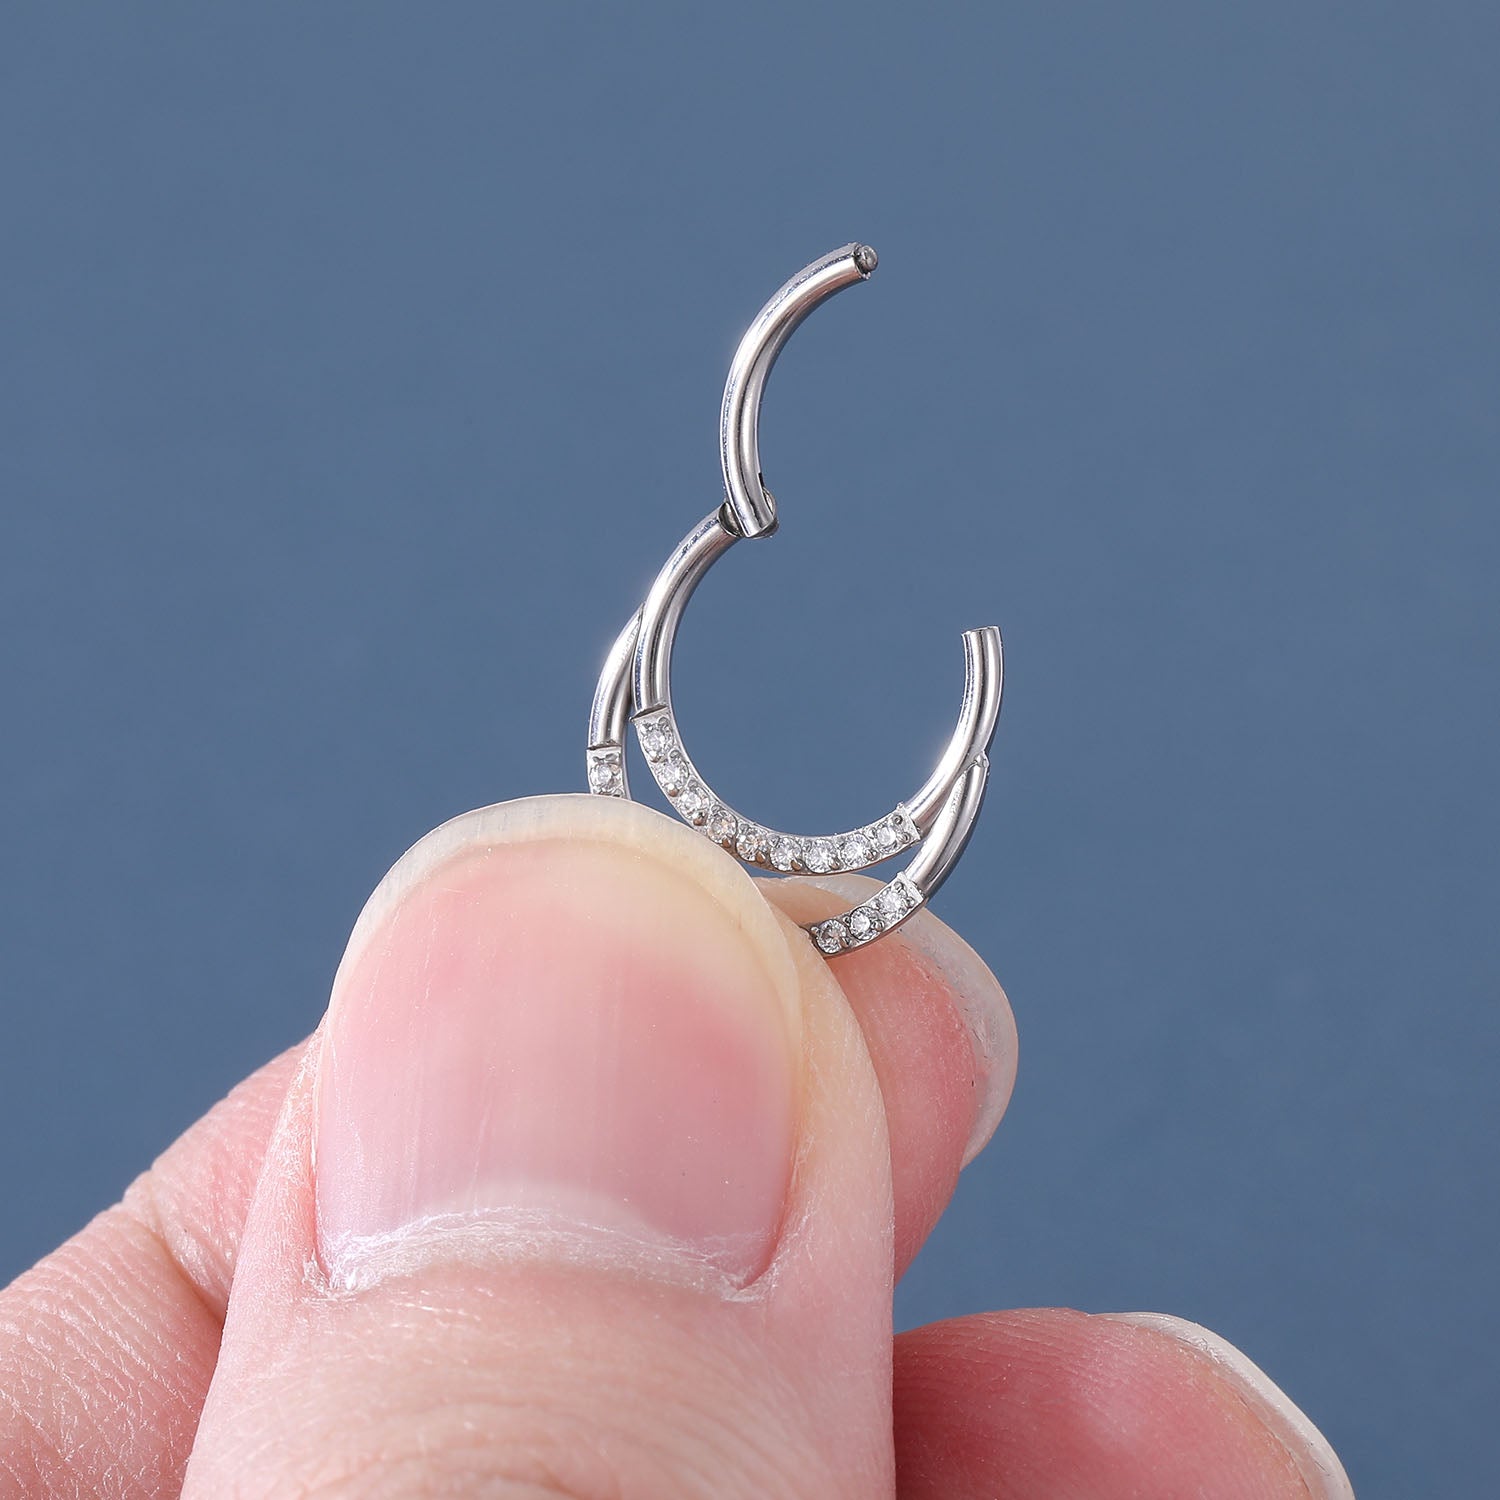 16g-g23-titanium-nose-septum-clicker-moon-crystal-conch-helix-cartilage-piercing